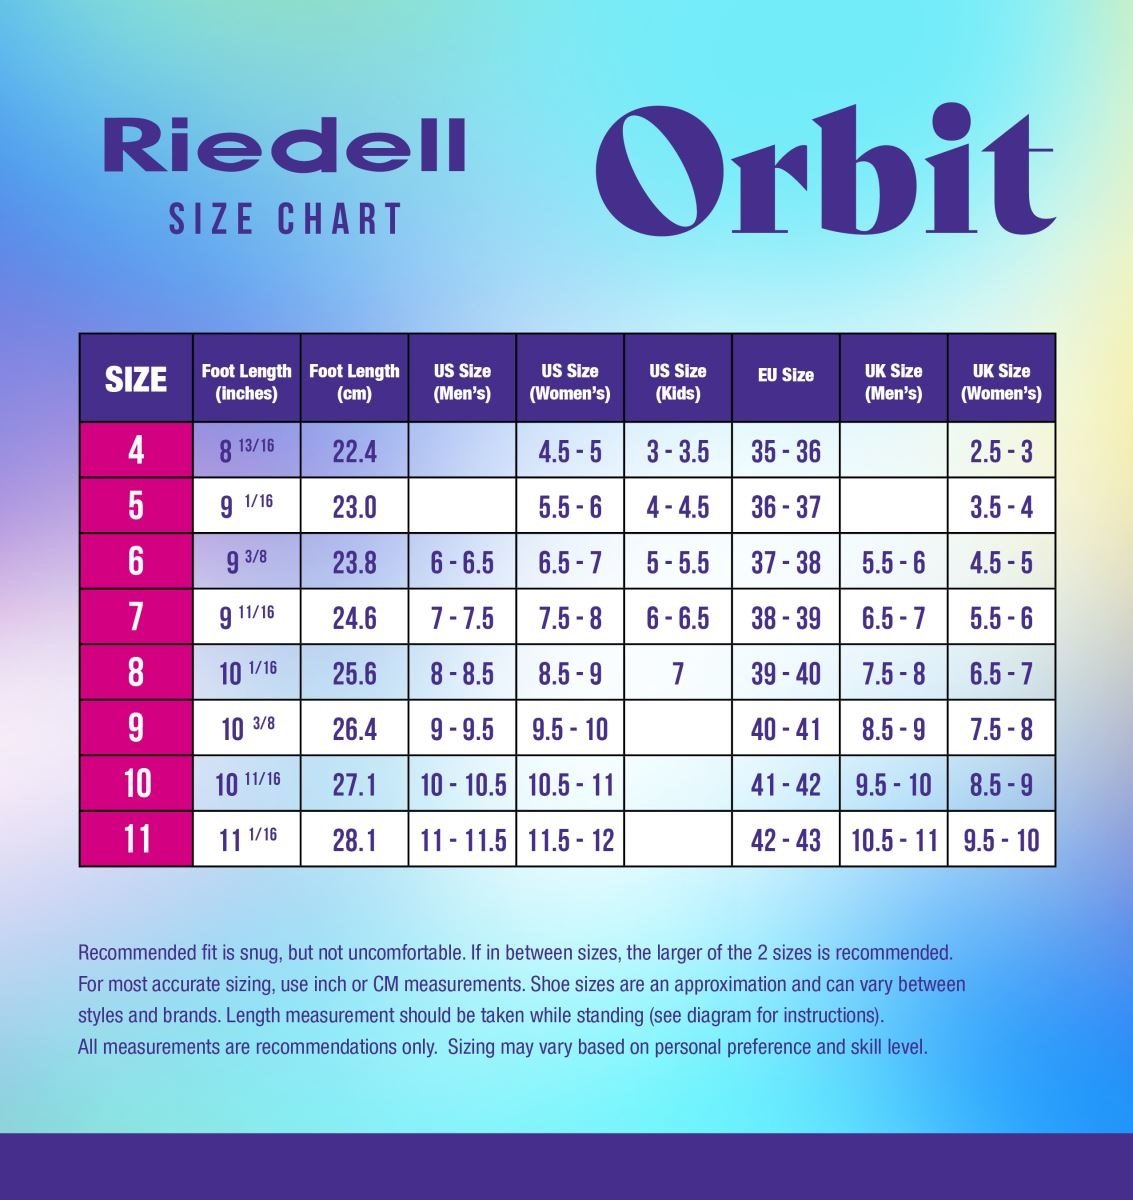 Riedell Orbit Sizing Chart